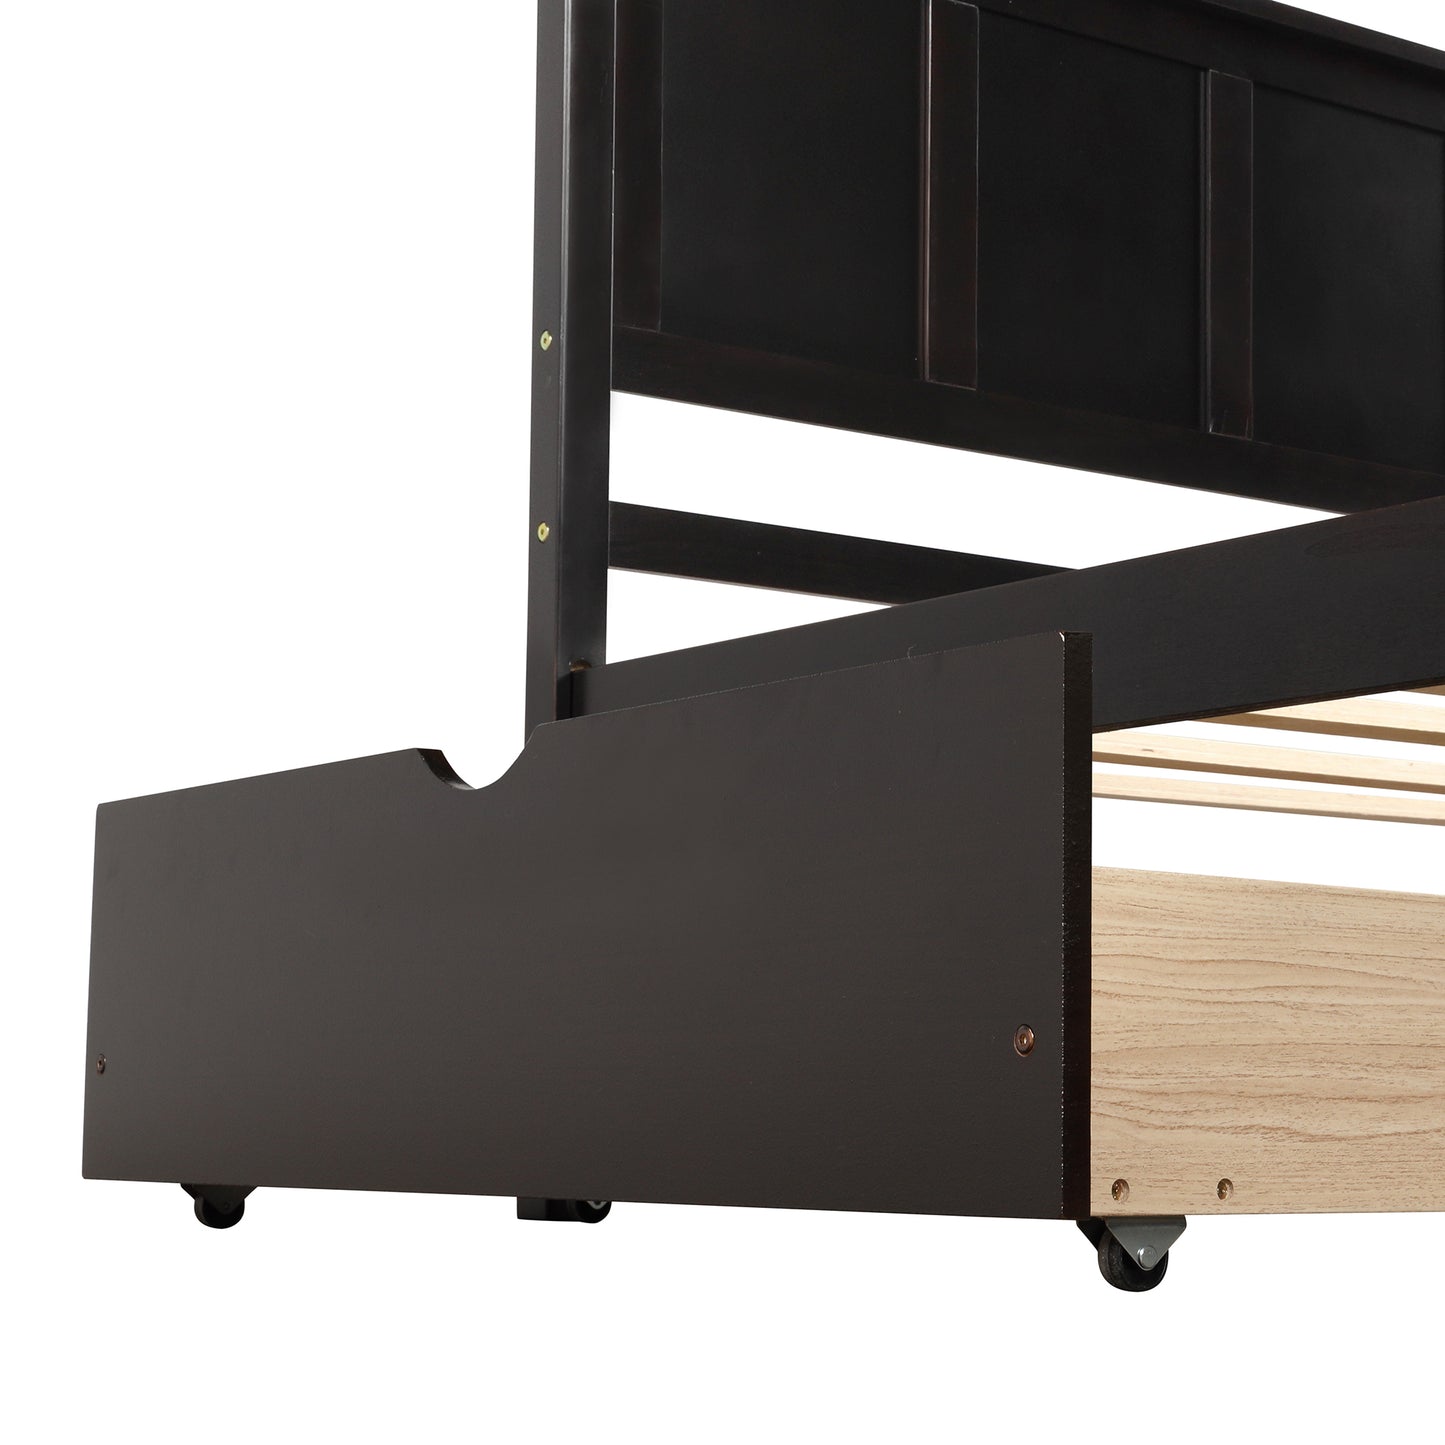 Platform Storage Bed, 2 drawers with wheels, Twin Size Frame, Espresso